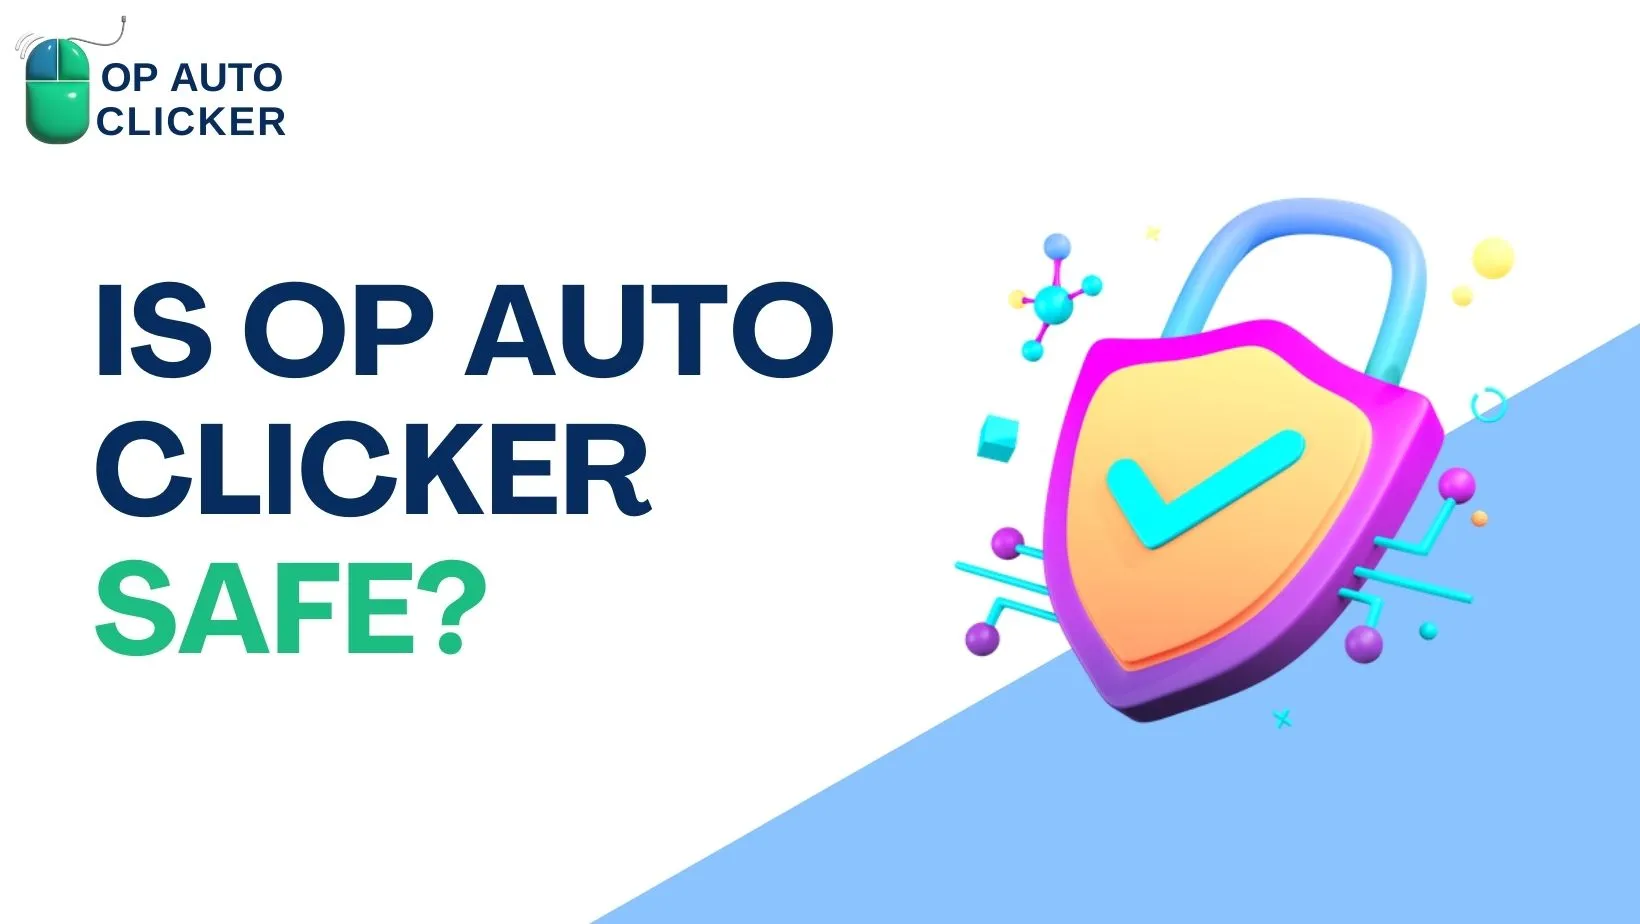 Is OP Auto Clicker safe?